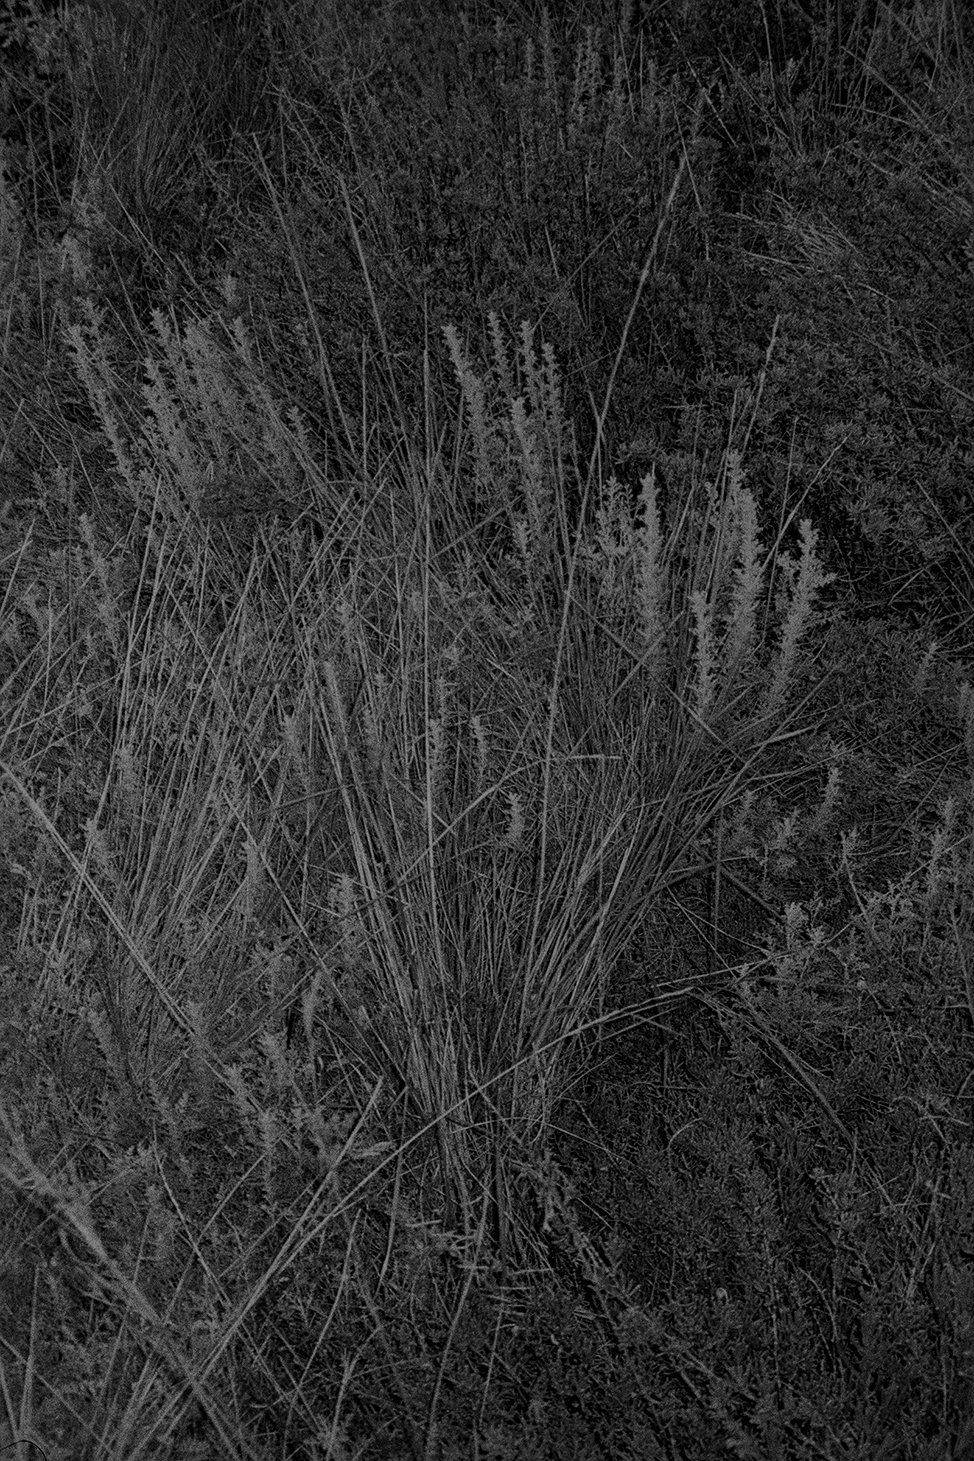 Menorca Plants Edit 25.jpg